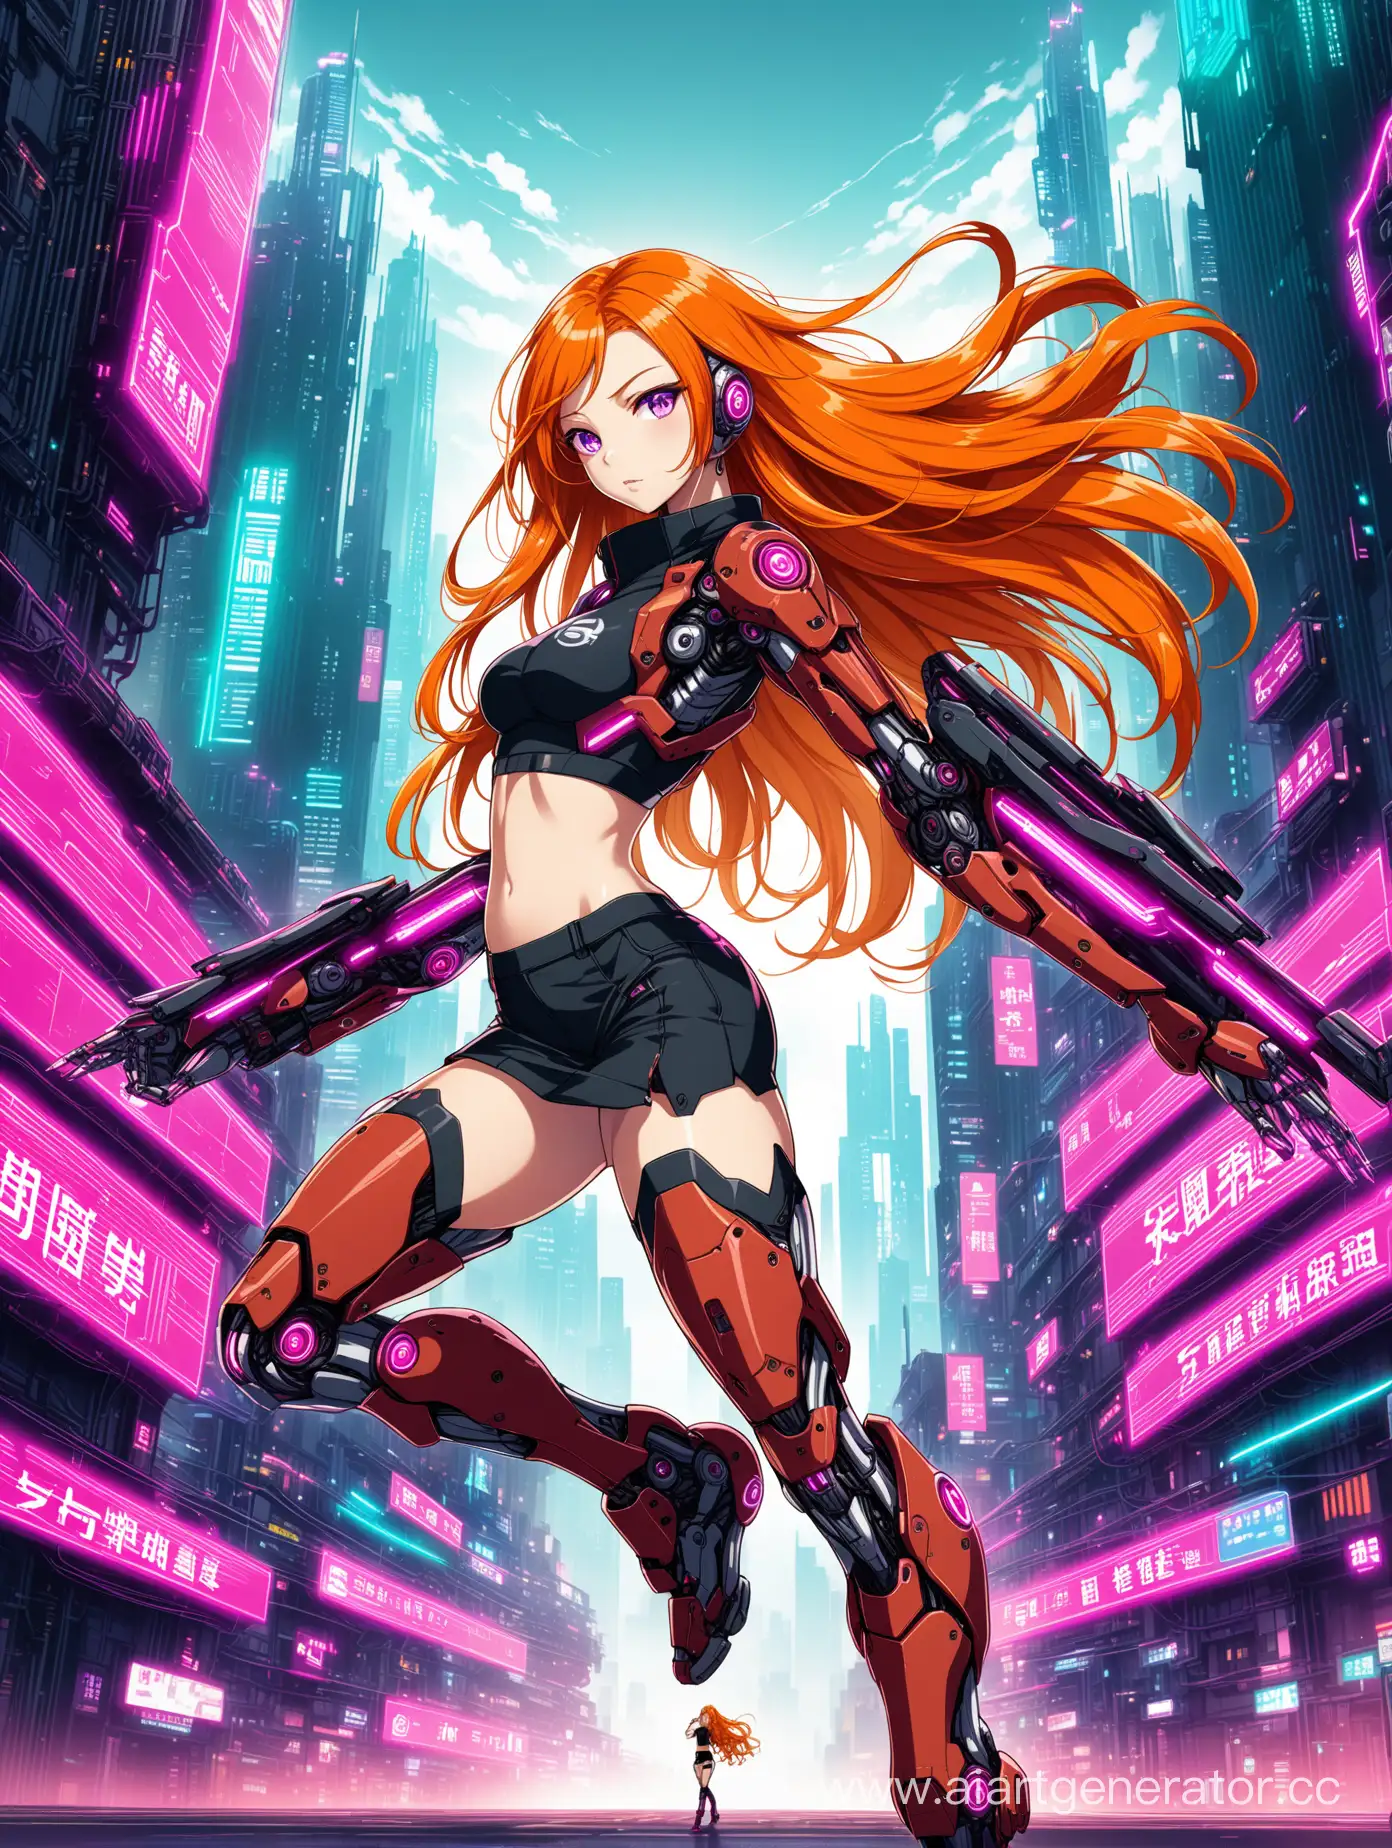 Cyborg-Girl-with-Orange-Hair-in-Cyberpunk-City